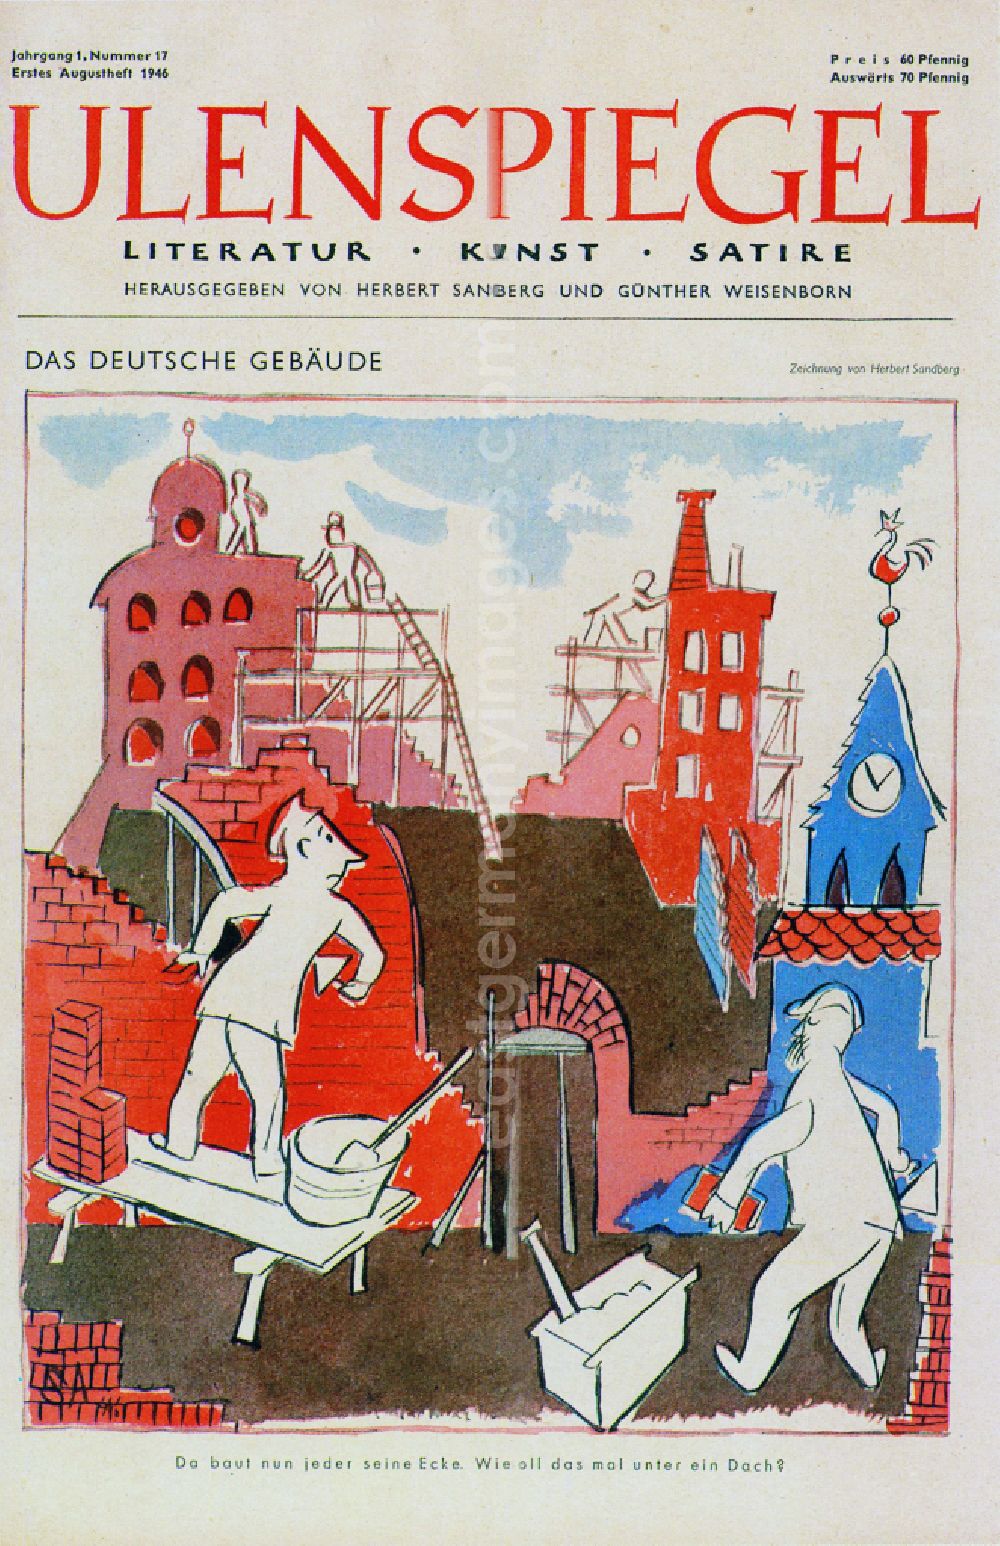 Berlin: Colored graphics Das Deutsche Gebaeude for titel of magazin ULENSPIEGEL of the GDR artist Herbert Sandberg in Berlin Eastberlin on the territory of the former GDR, German Democratic Republic